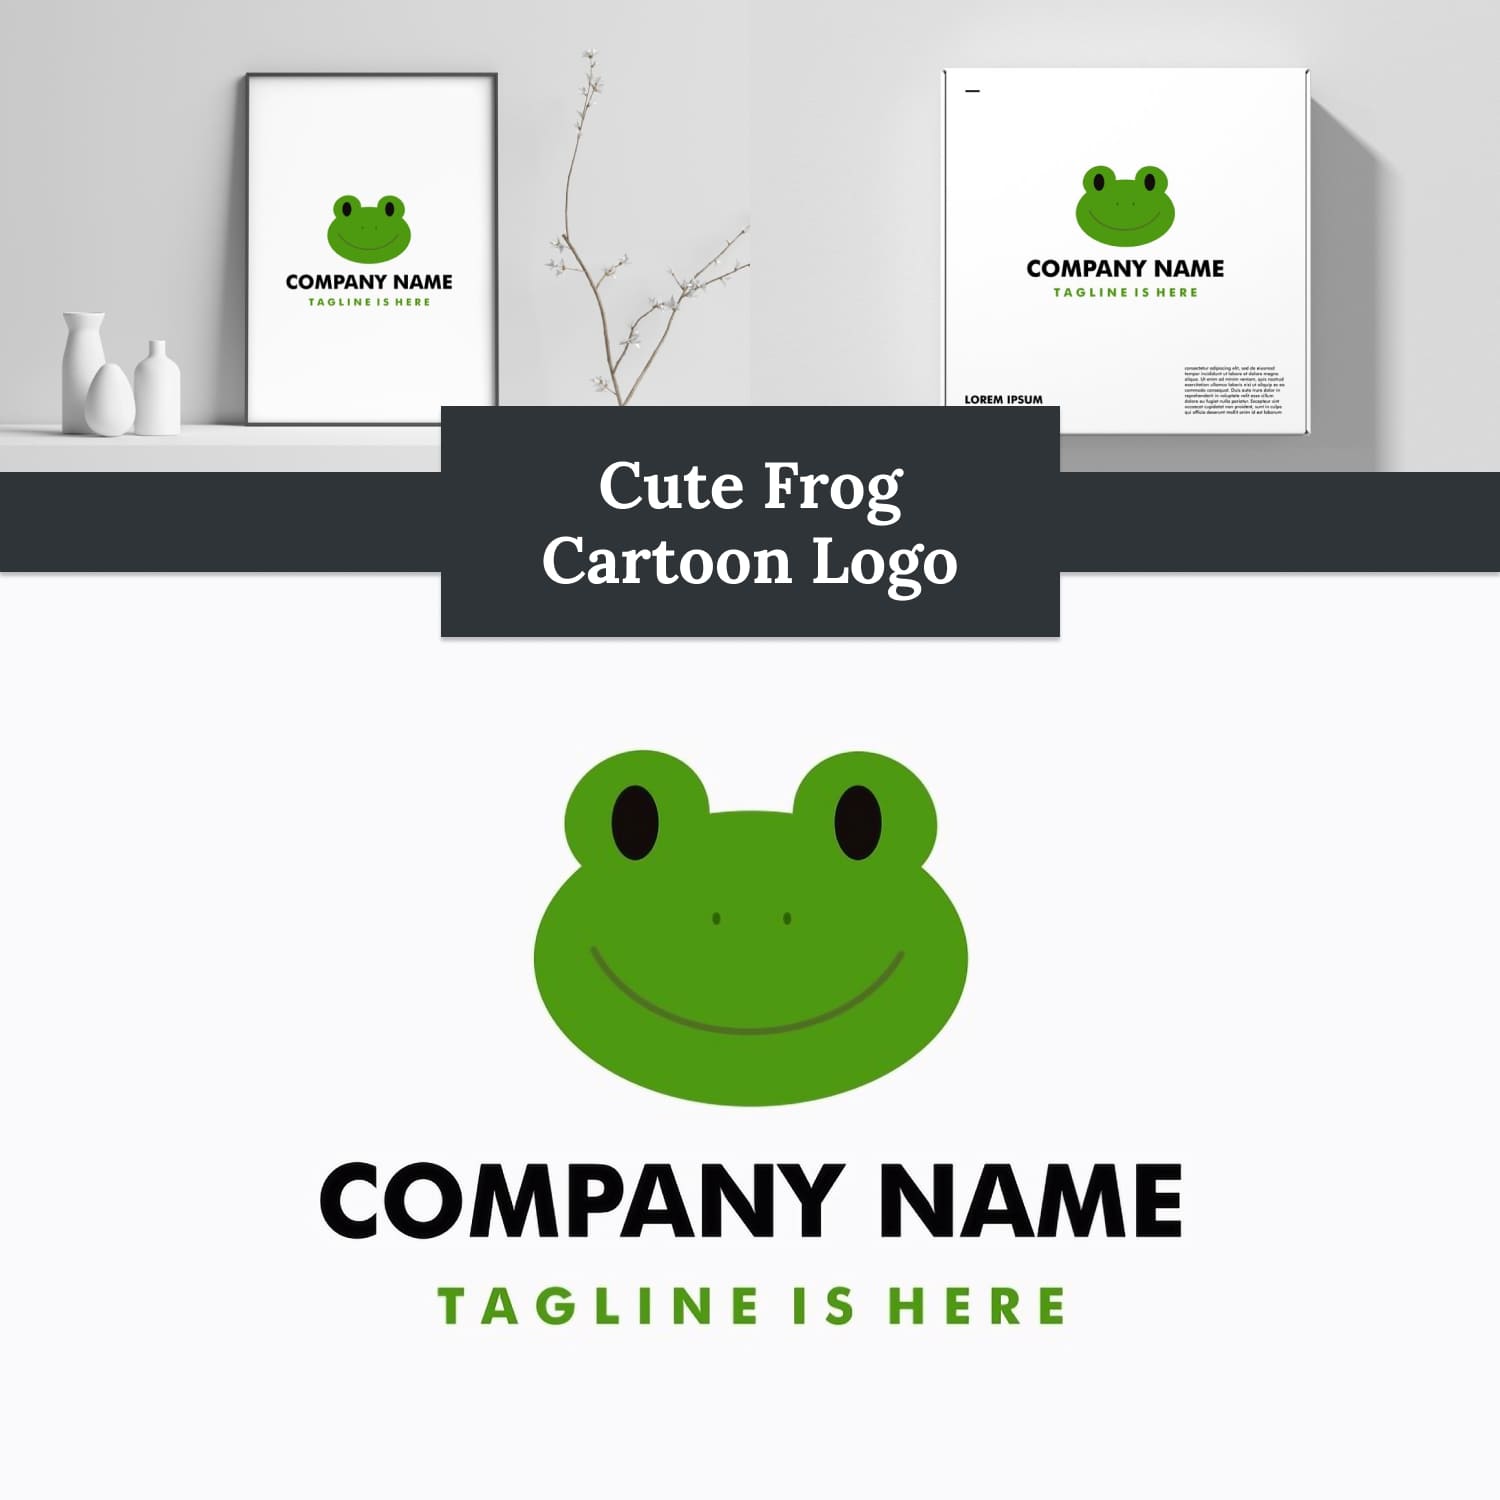 Cute frog cartoon logo - main image preview.